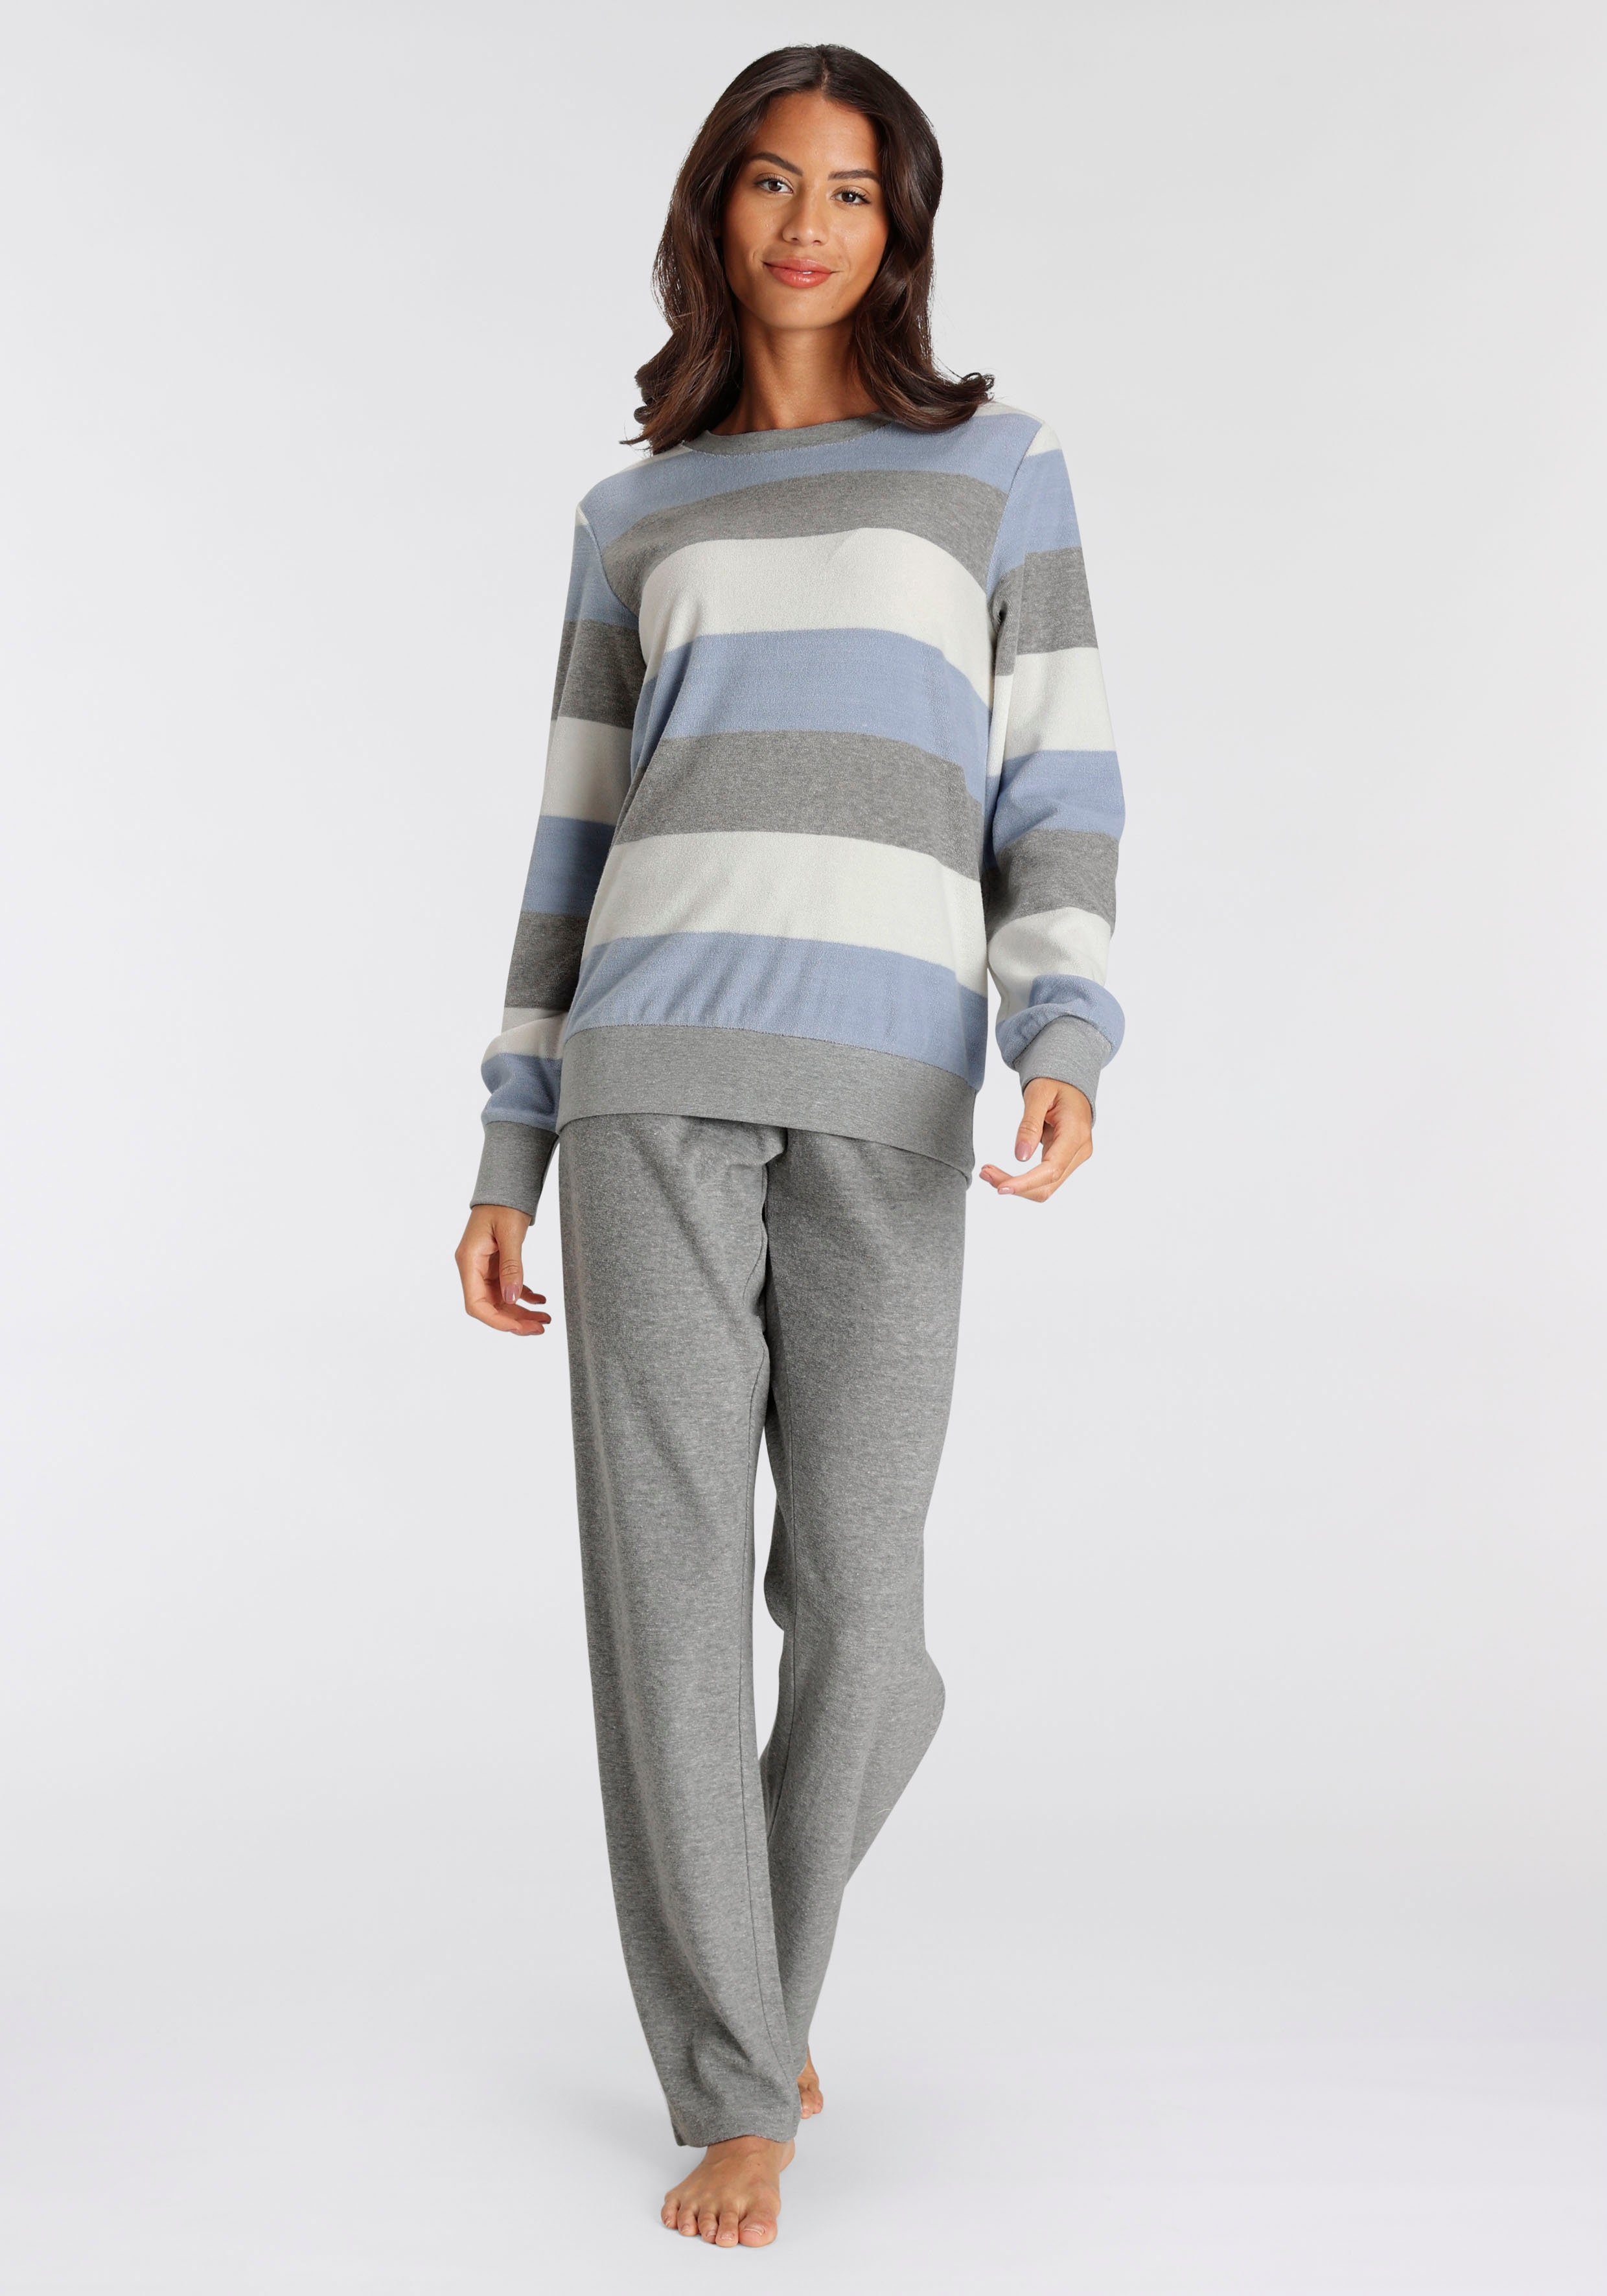 Vivance Dreams Pyjama (2 tlg) aus weichem Frottée und mit Colorblock Streifen grau-blau | Pyjama-Sets